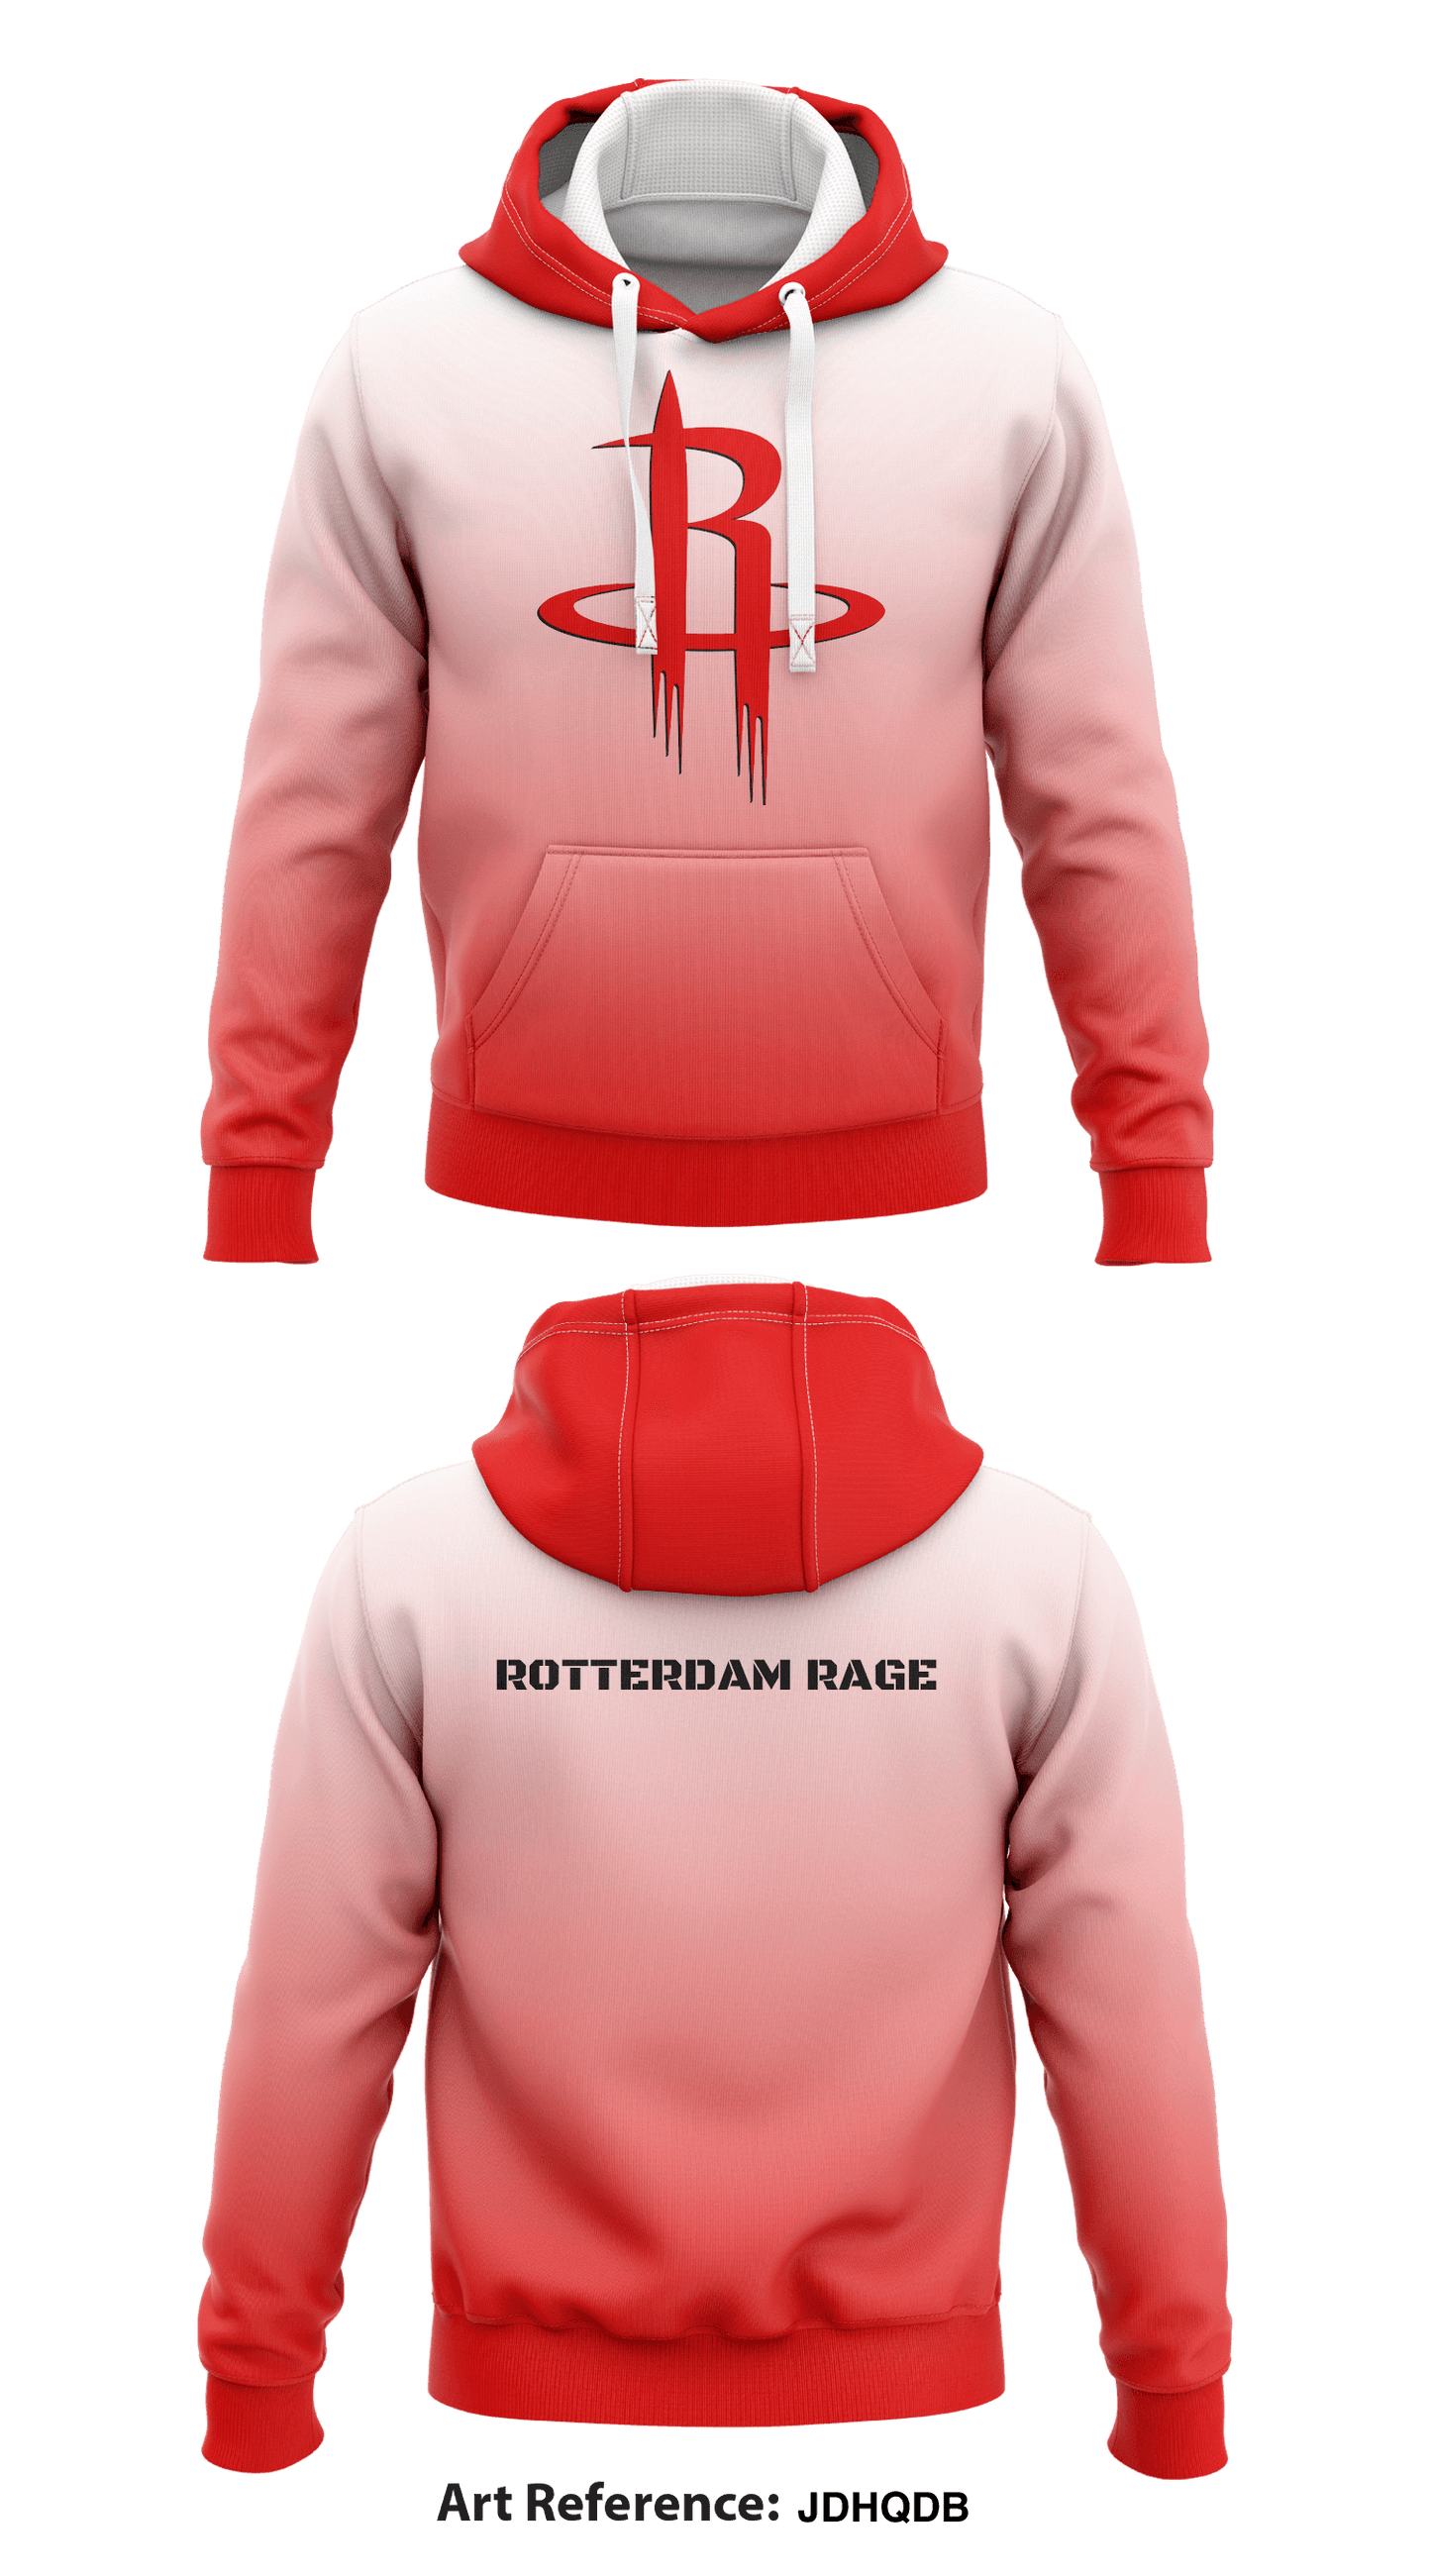 Rotterdam Rage Store 1 Core Men's Hooded Performance Sweatshirt - JDHqDB